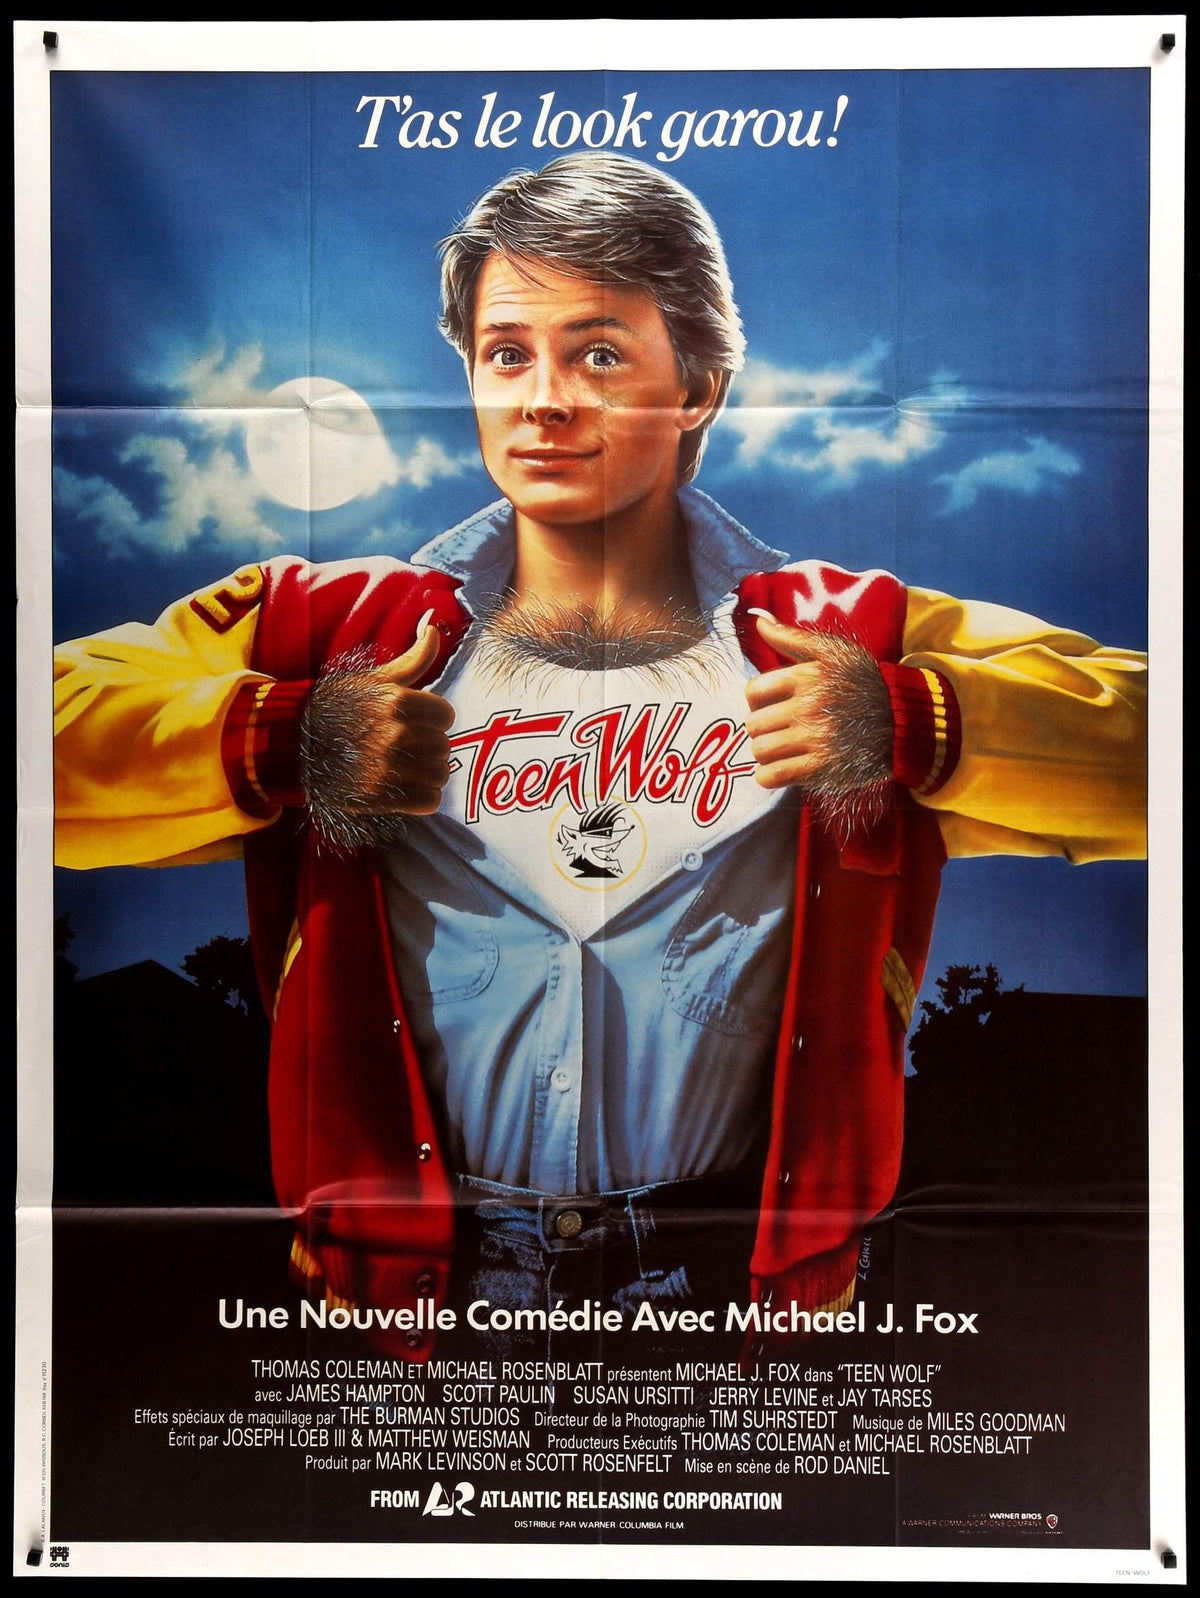 Teen Wolf (1985) original movie poster for sale at Original Film Art